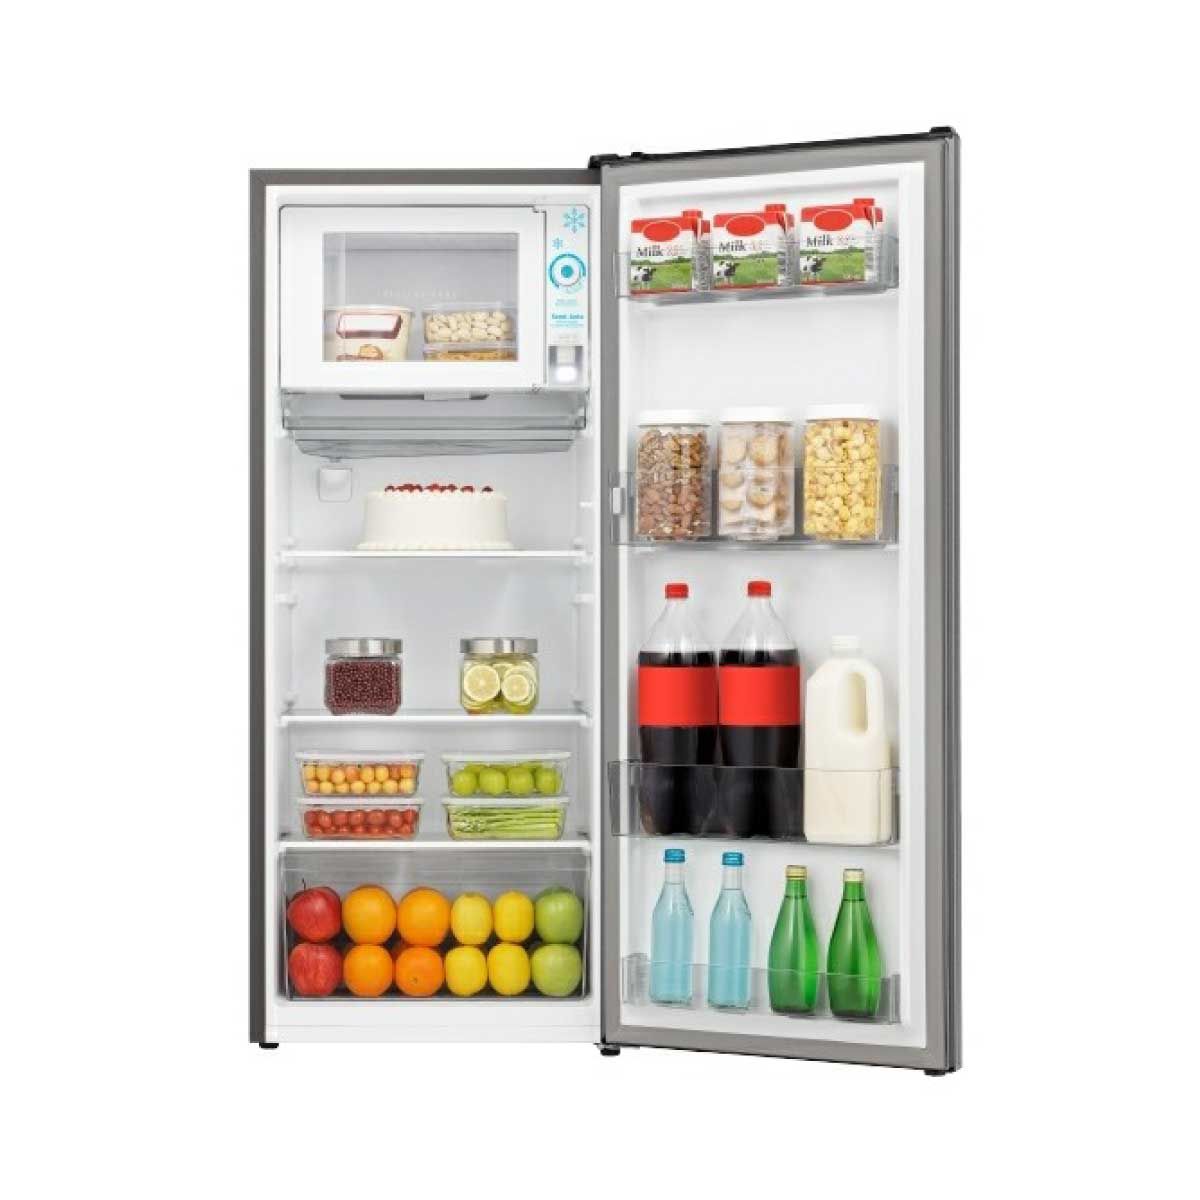 HISENSE ตู้เย็น 1ประตู 6.5Q สีเงิน รุ่นRR239D4TGN